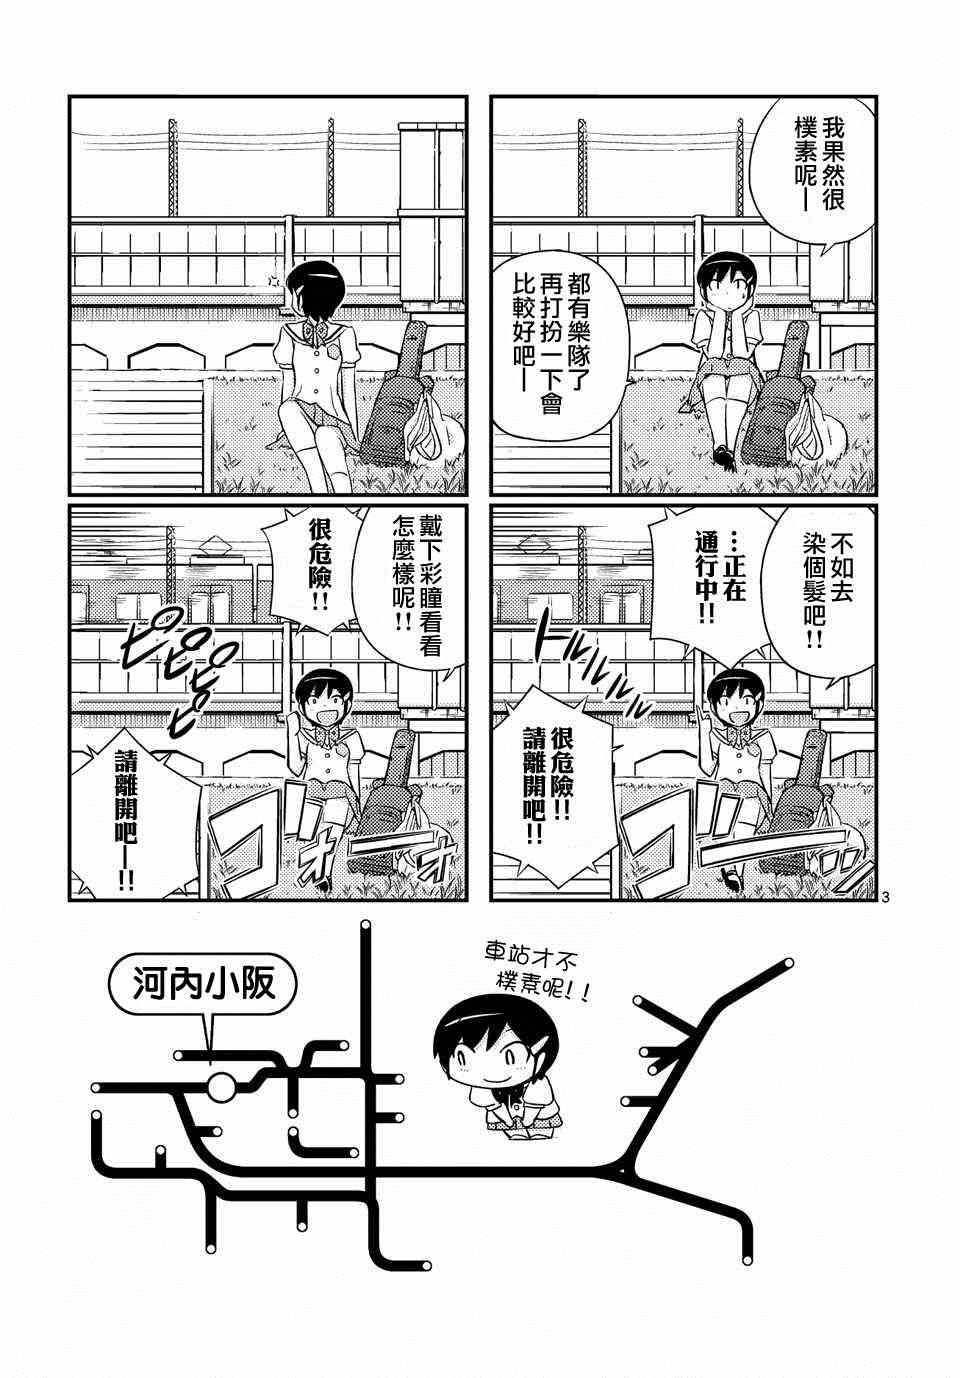 《只有神知道的世界》漫画 on the train 06集